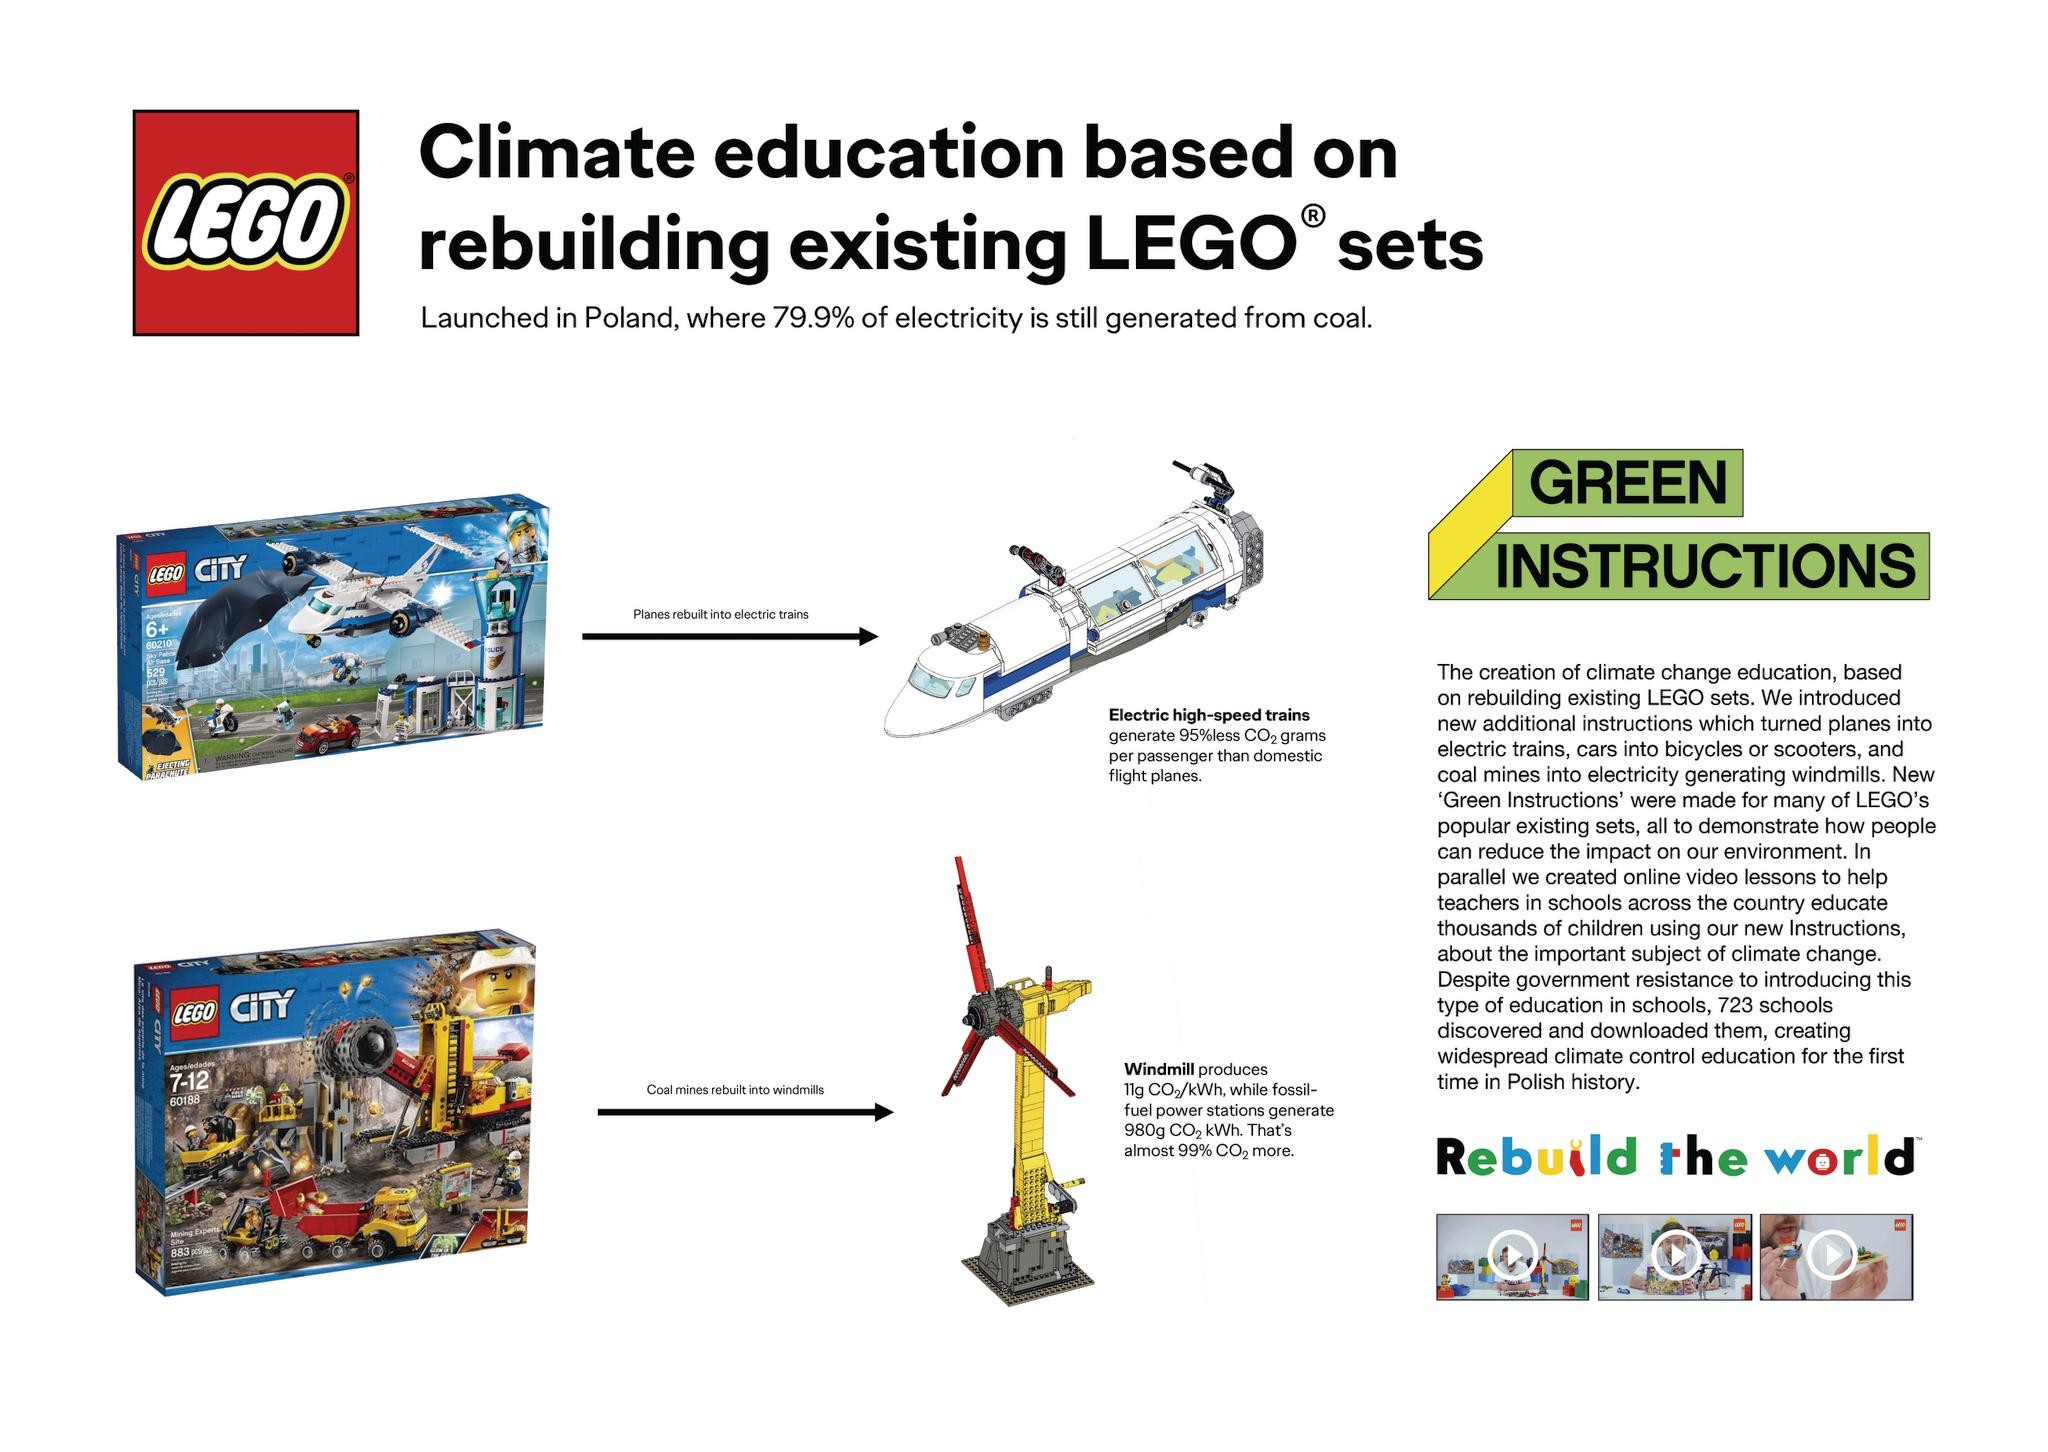 LEGO GREEN INSTRUCTIONS